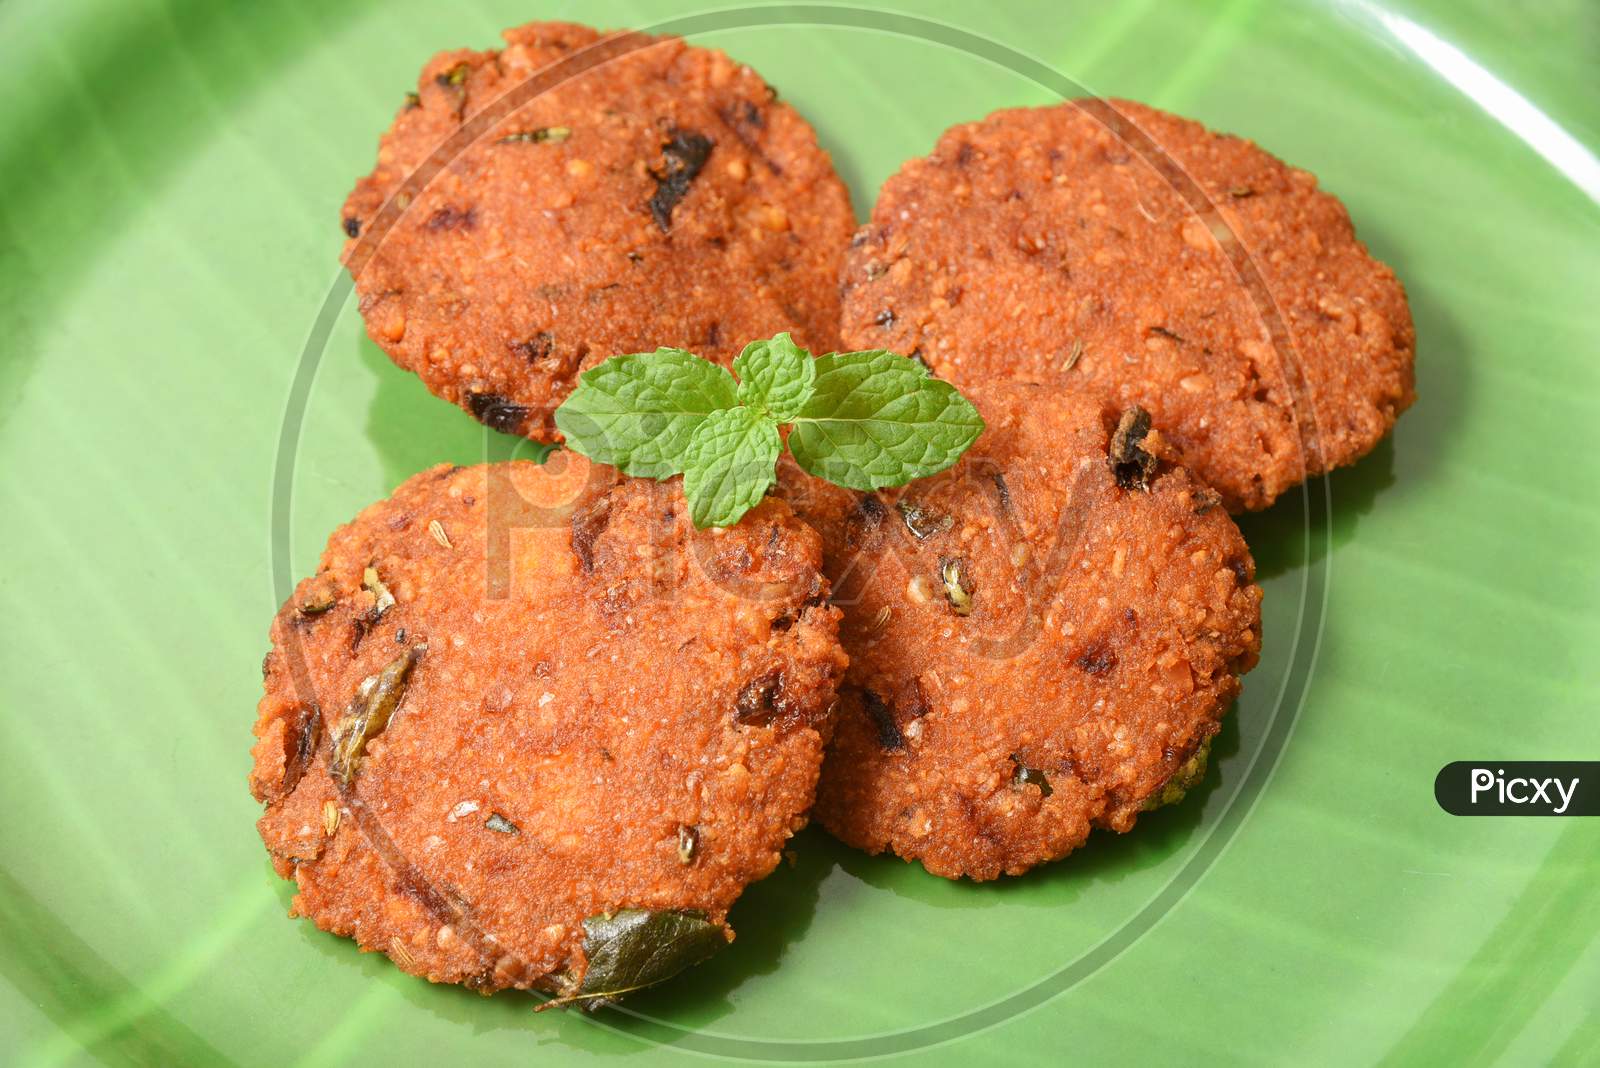 Parippu vada, Dal vada fried Kerala snack